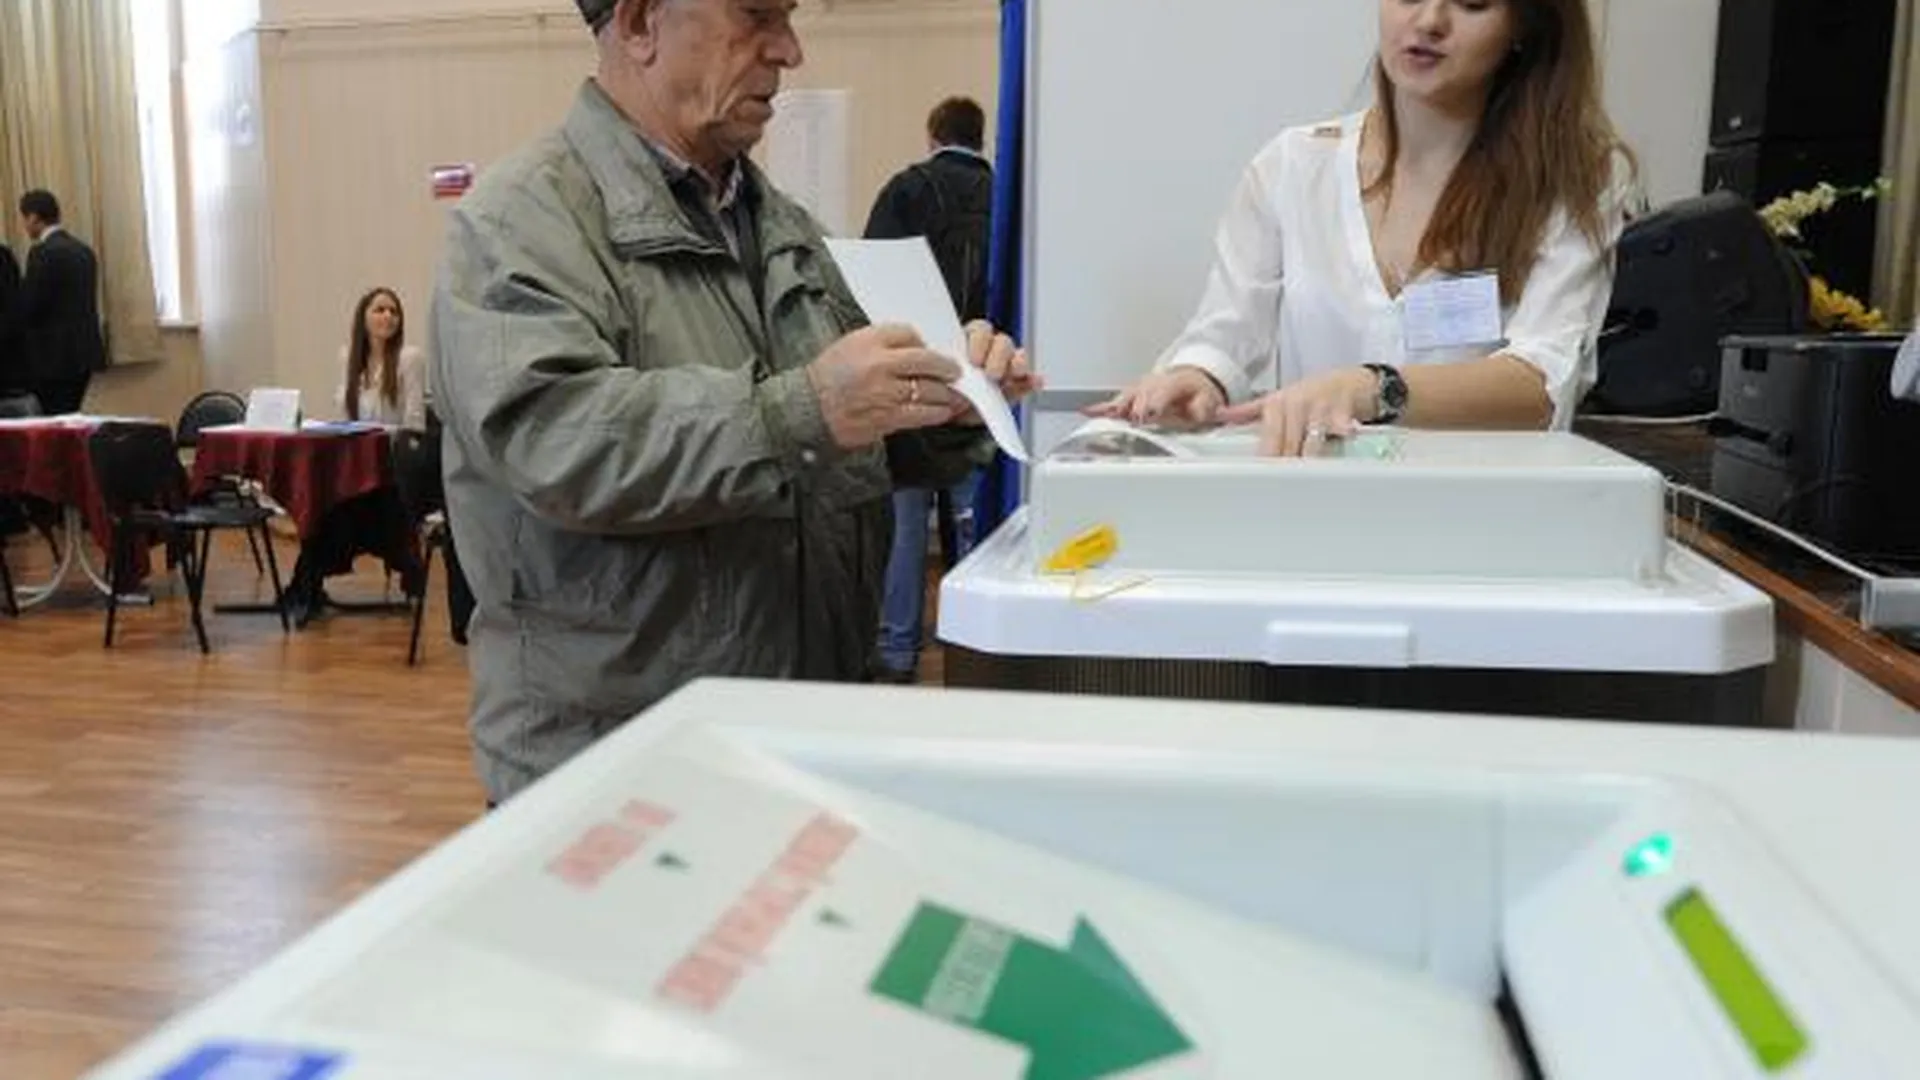 Явка на выборах мэра москвы